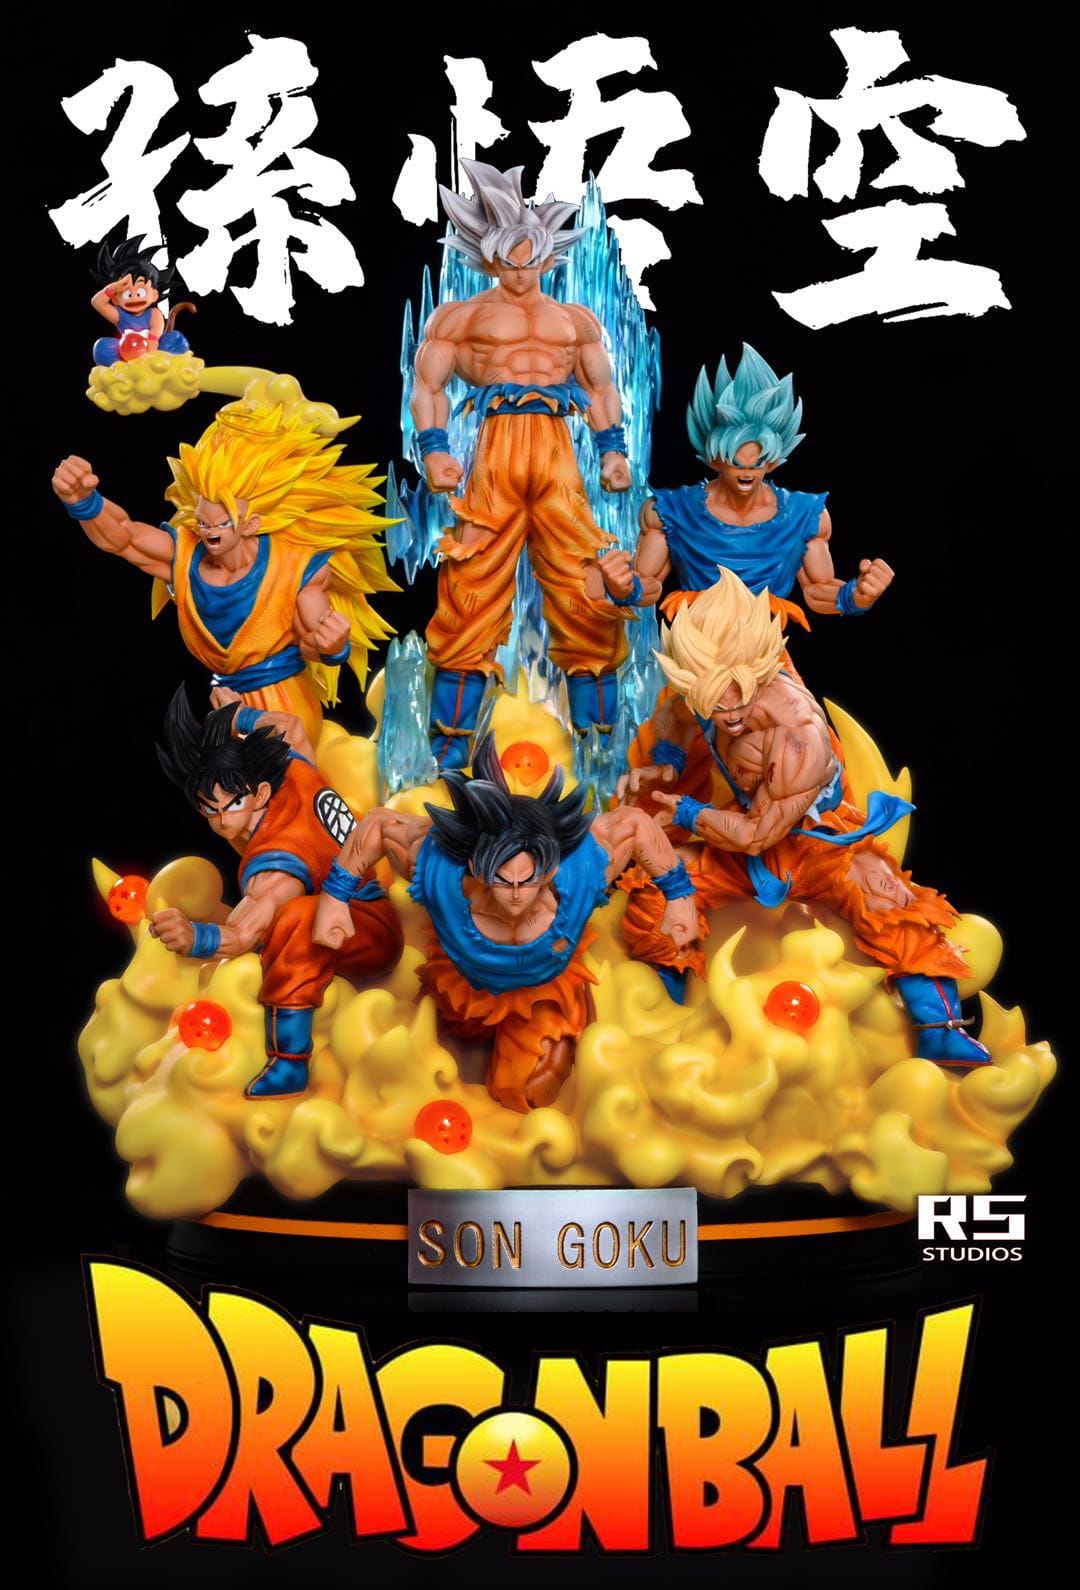 RS Studio - Son Goku all style